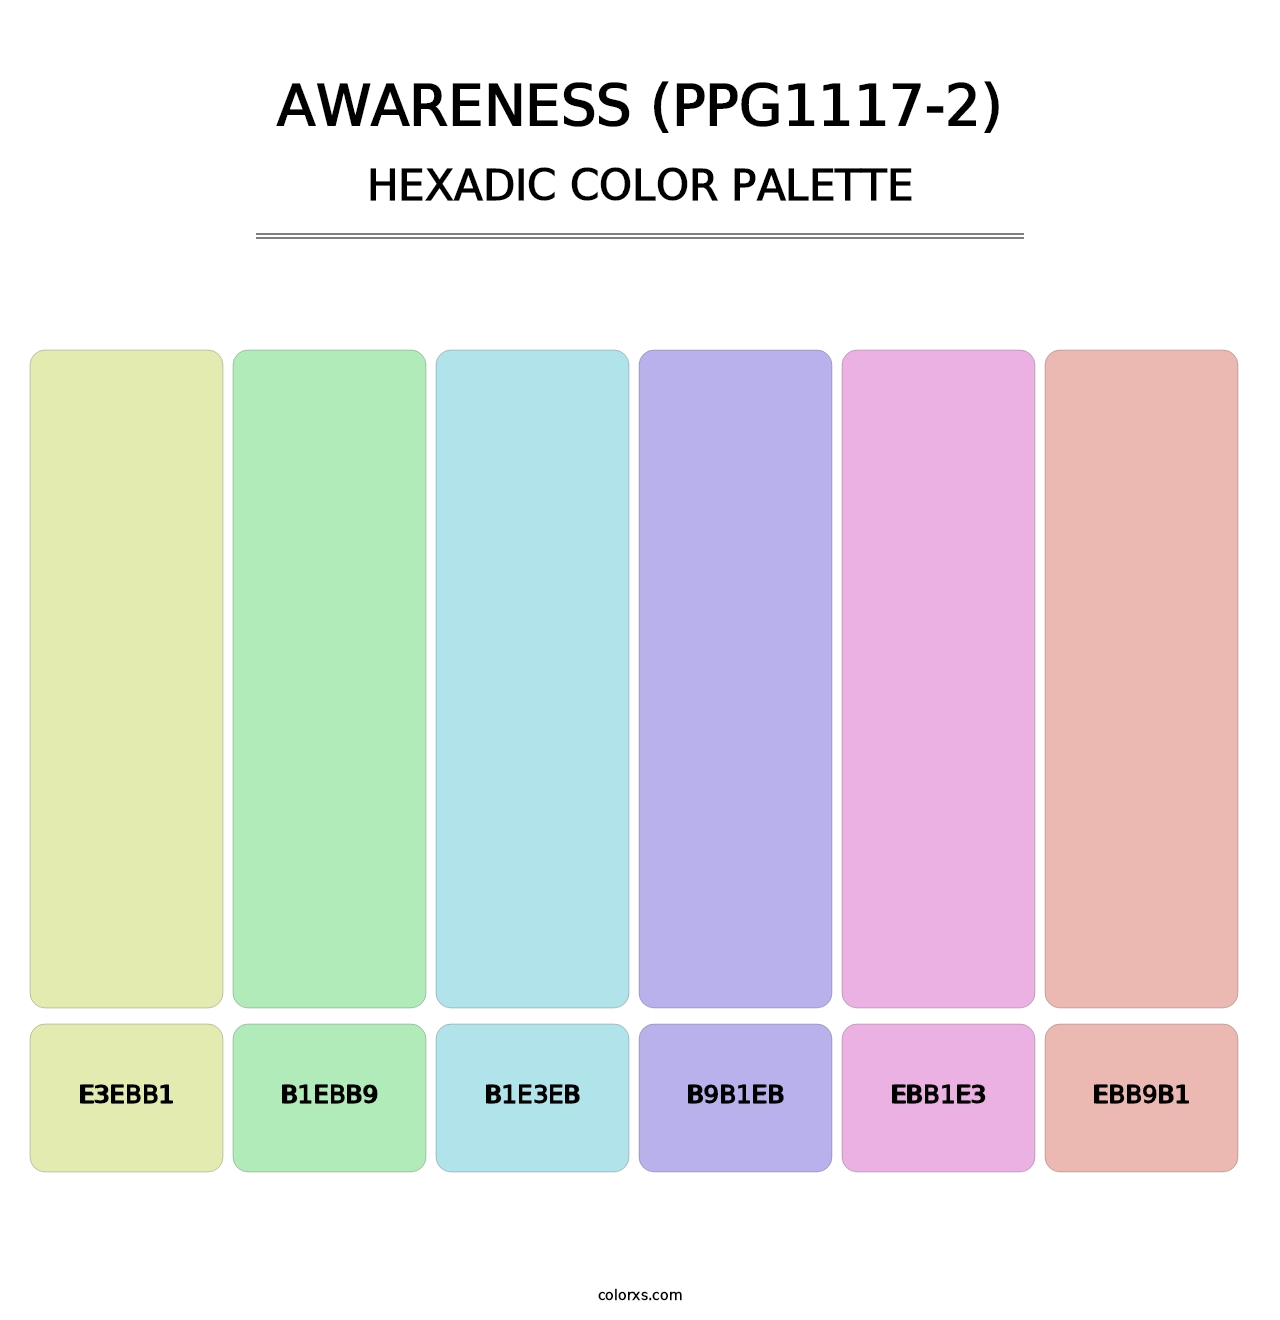 Awareness (PPG1117-2) - Hexadic Color Palette